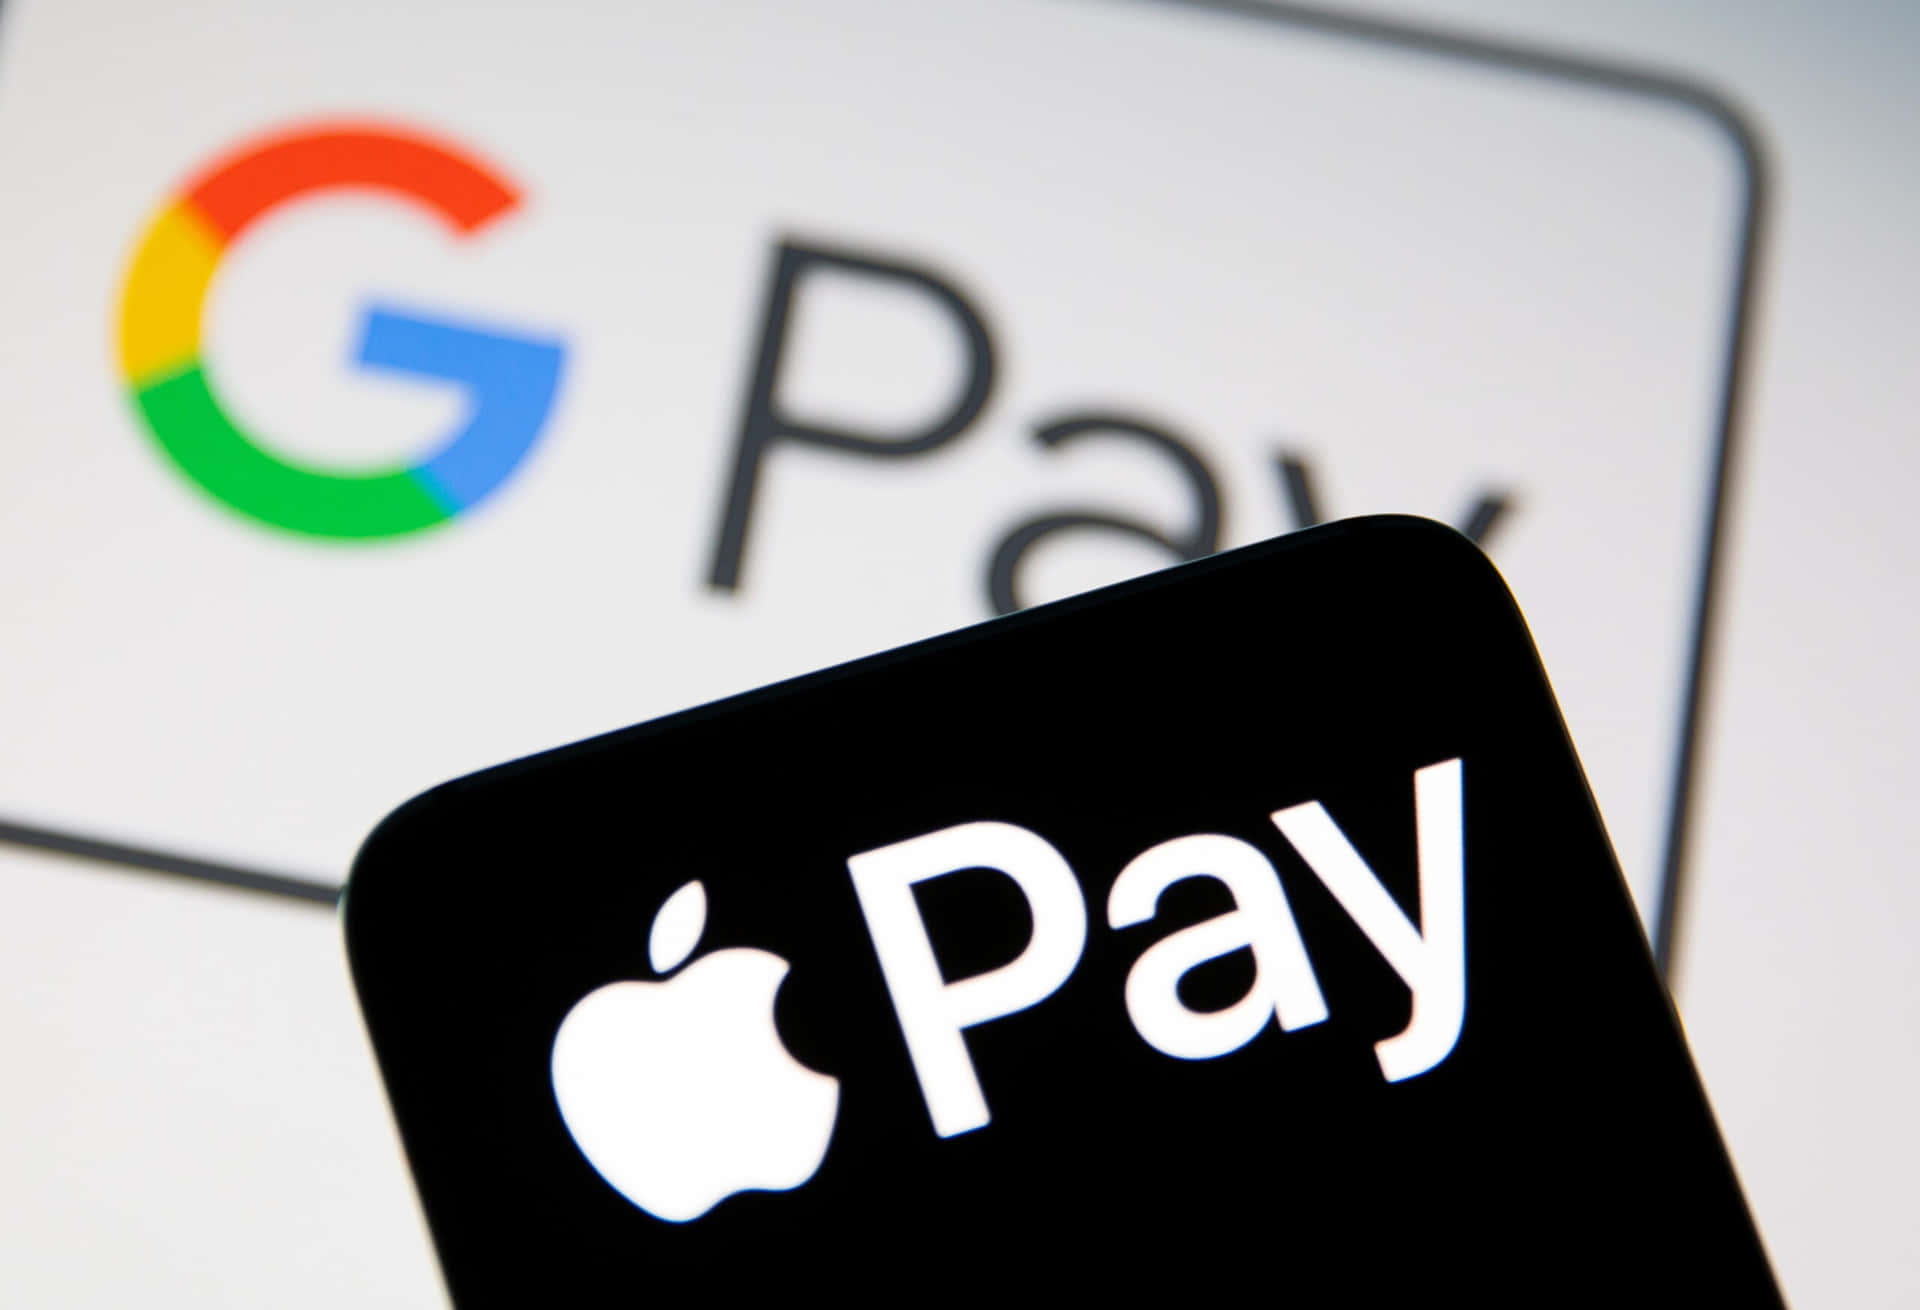 Google Pay Logo On A Phone Screen